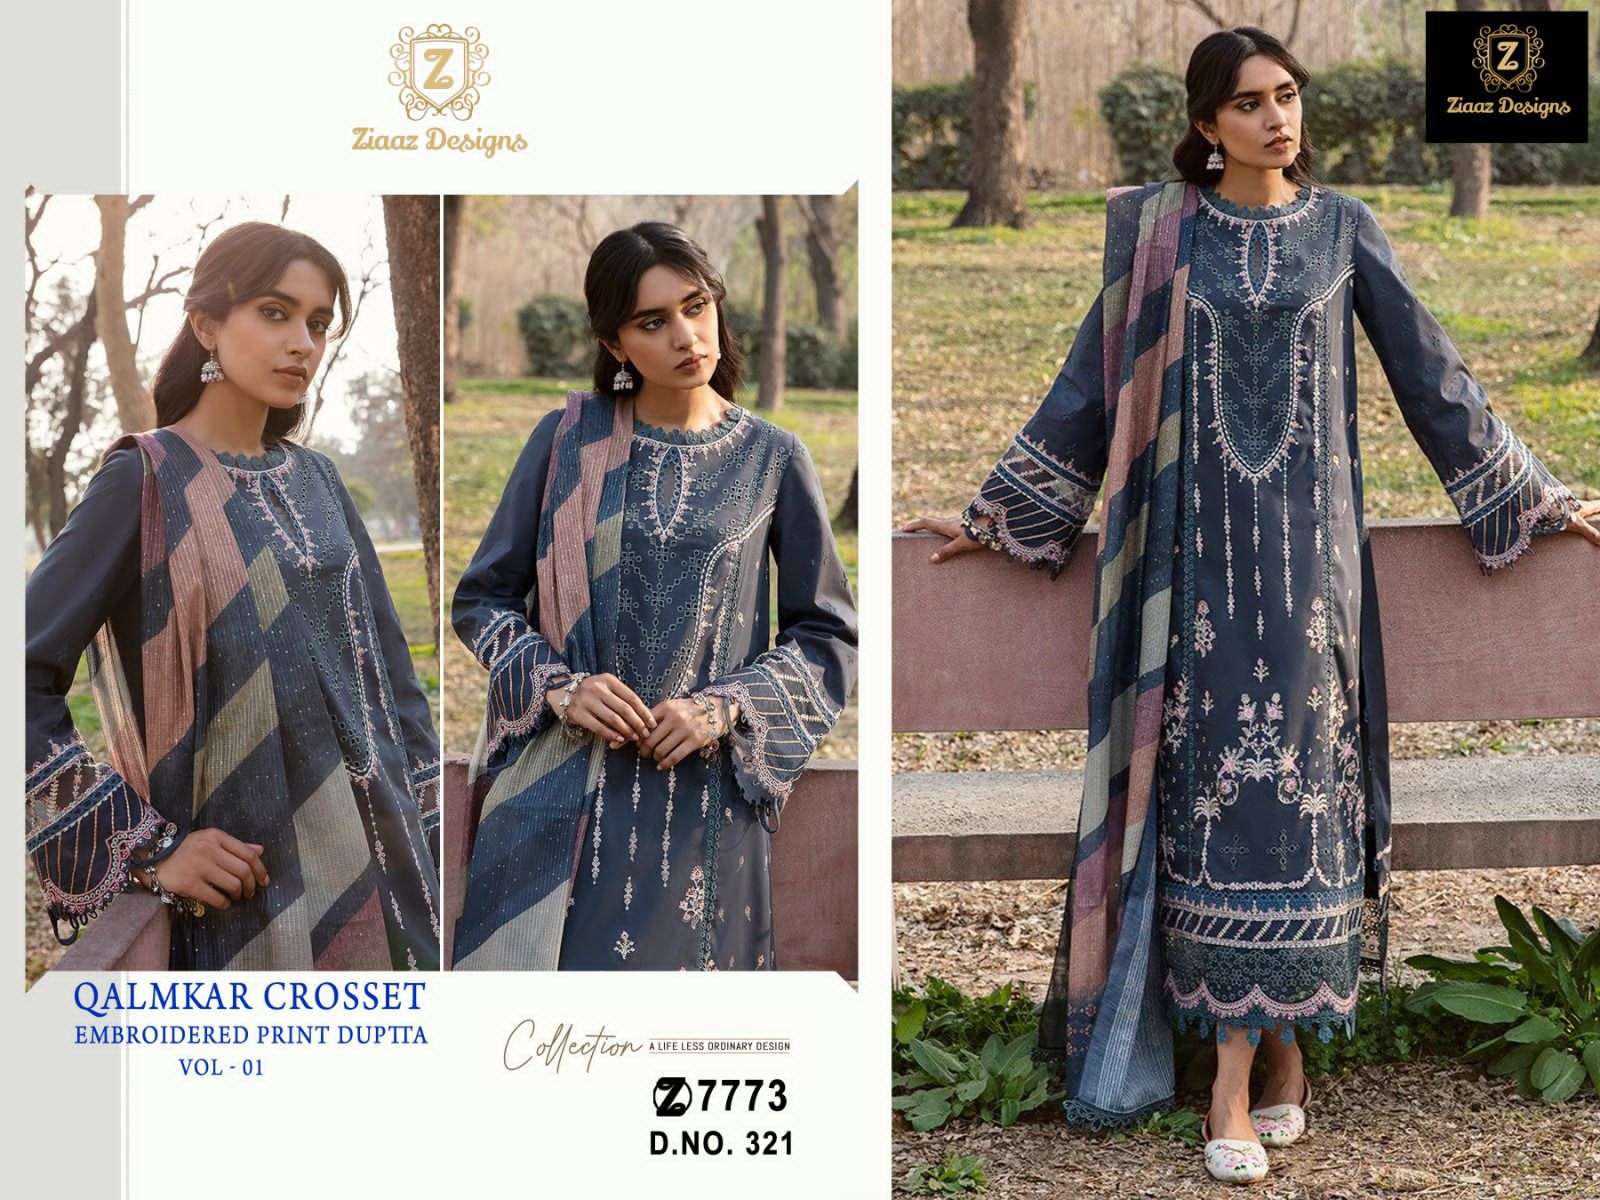 ziaaz designs 321 designer cotton embroidery suit 